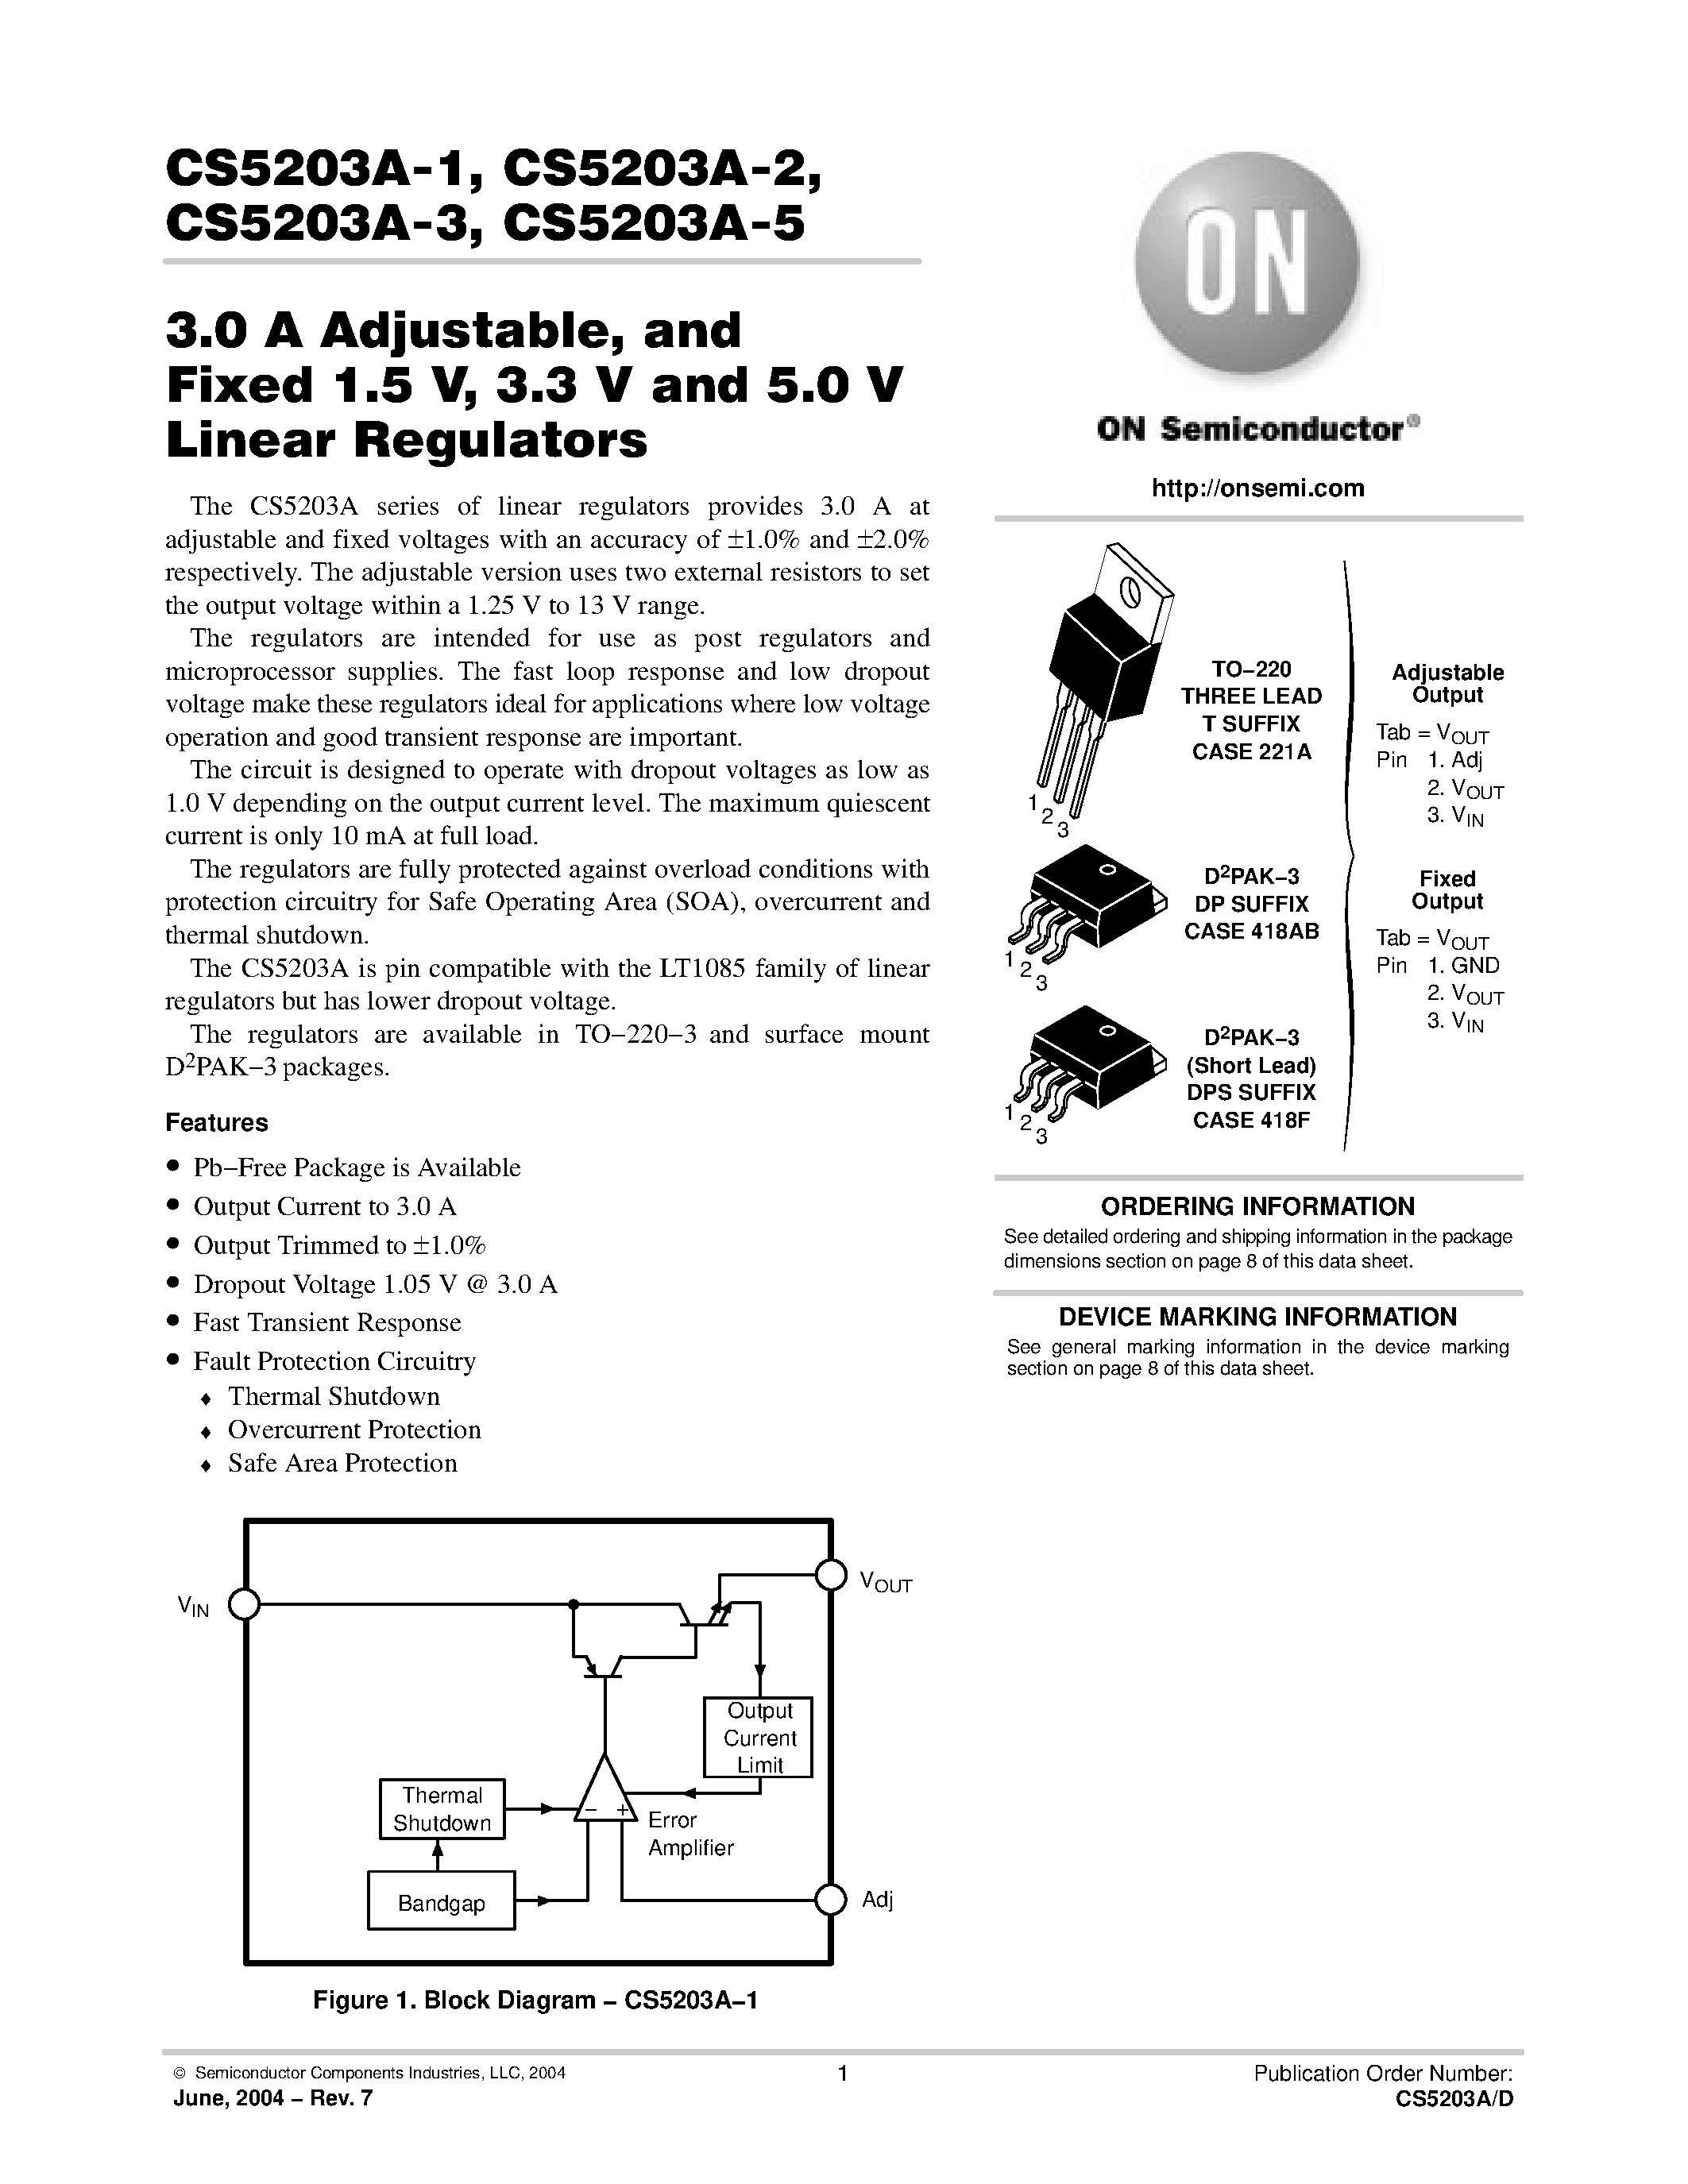 Datasheet CS5203A-5 - 3.0 A Adjustable/ and Fixed 1.5 V/ 3.3 V and 5.0 V Linear Regulators page 1